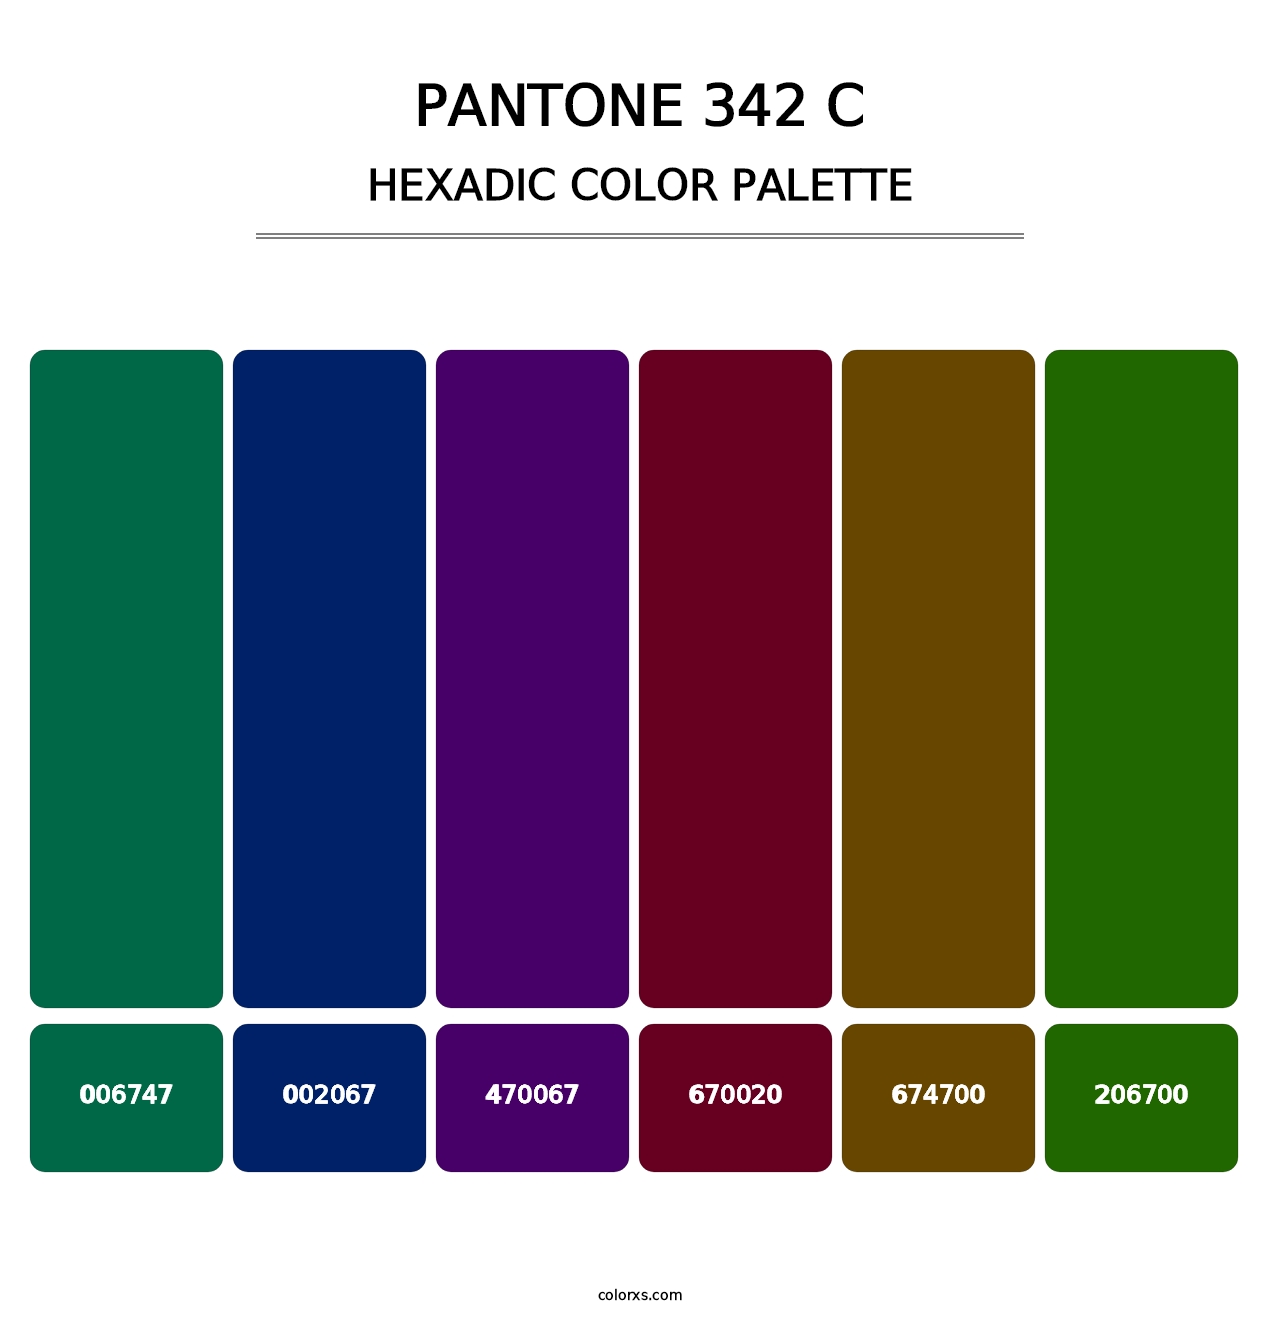 PANTONE 342 C - Hexadic Color Palette